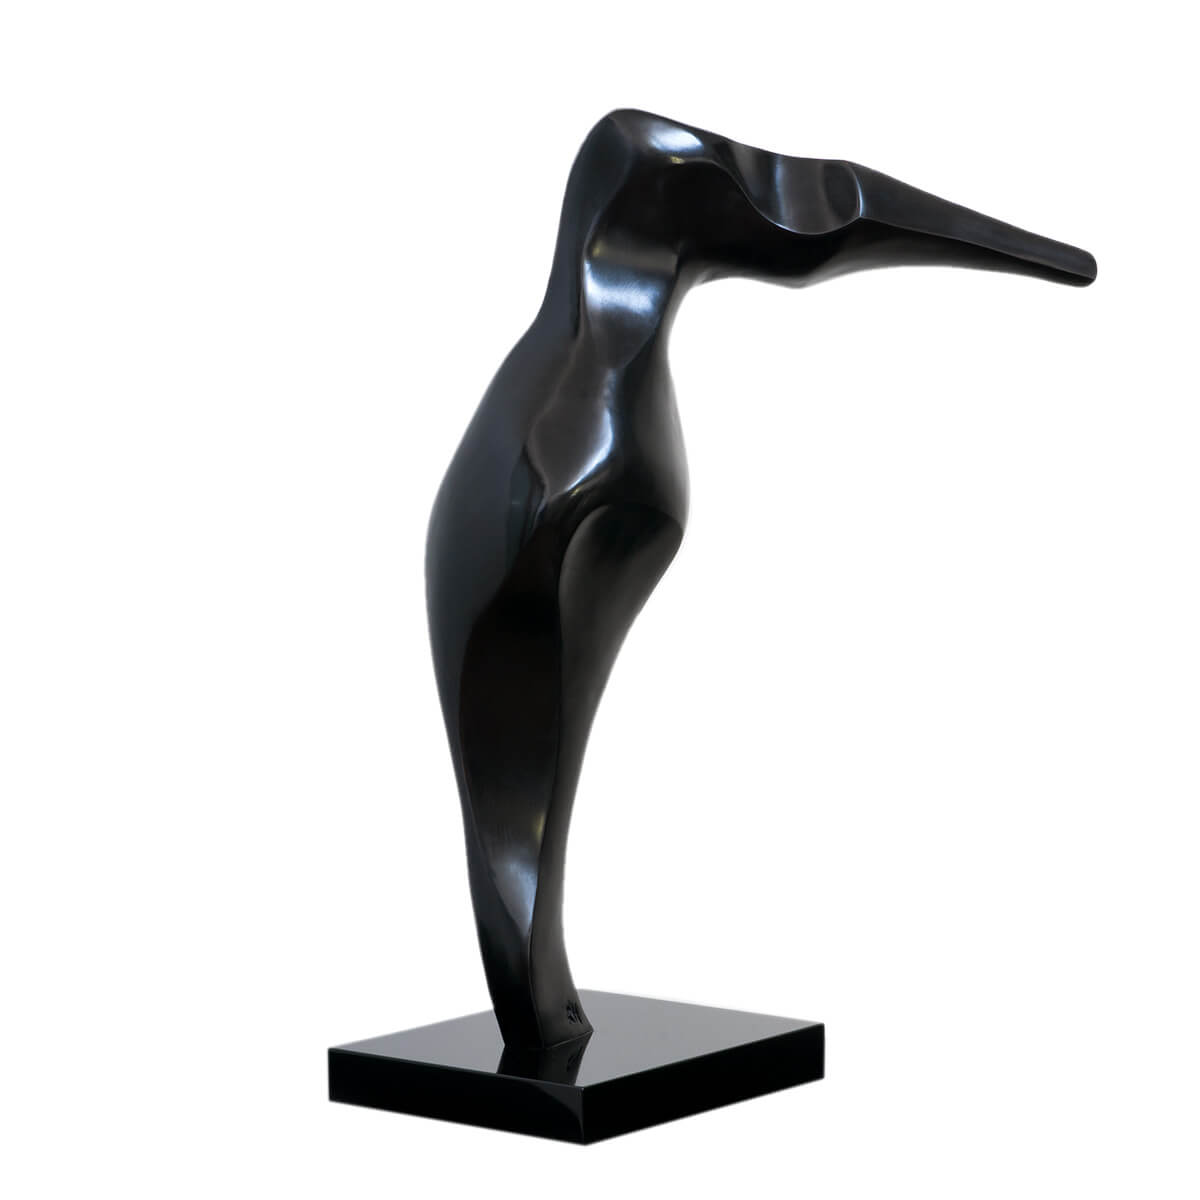 Robert-Helle-Sculpture-Gallery-Grace-1c-1200x1200